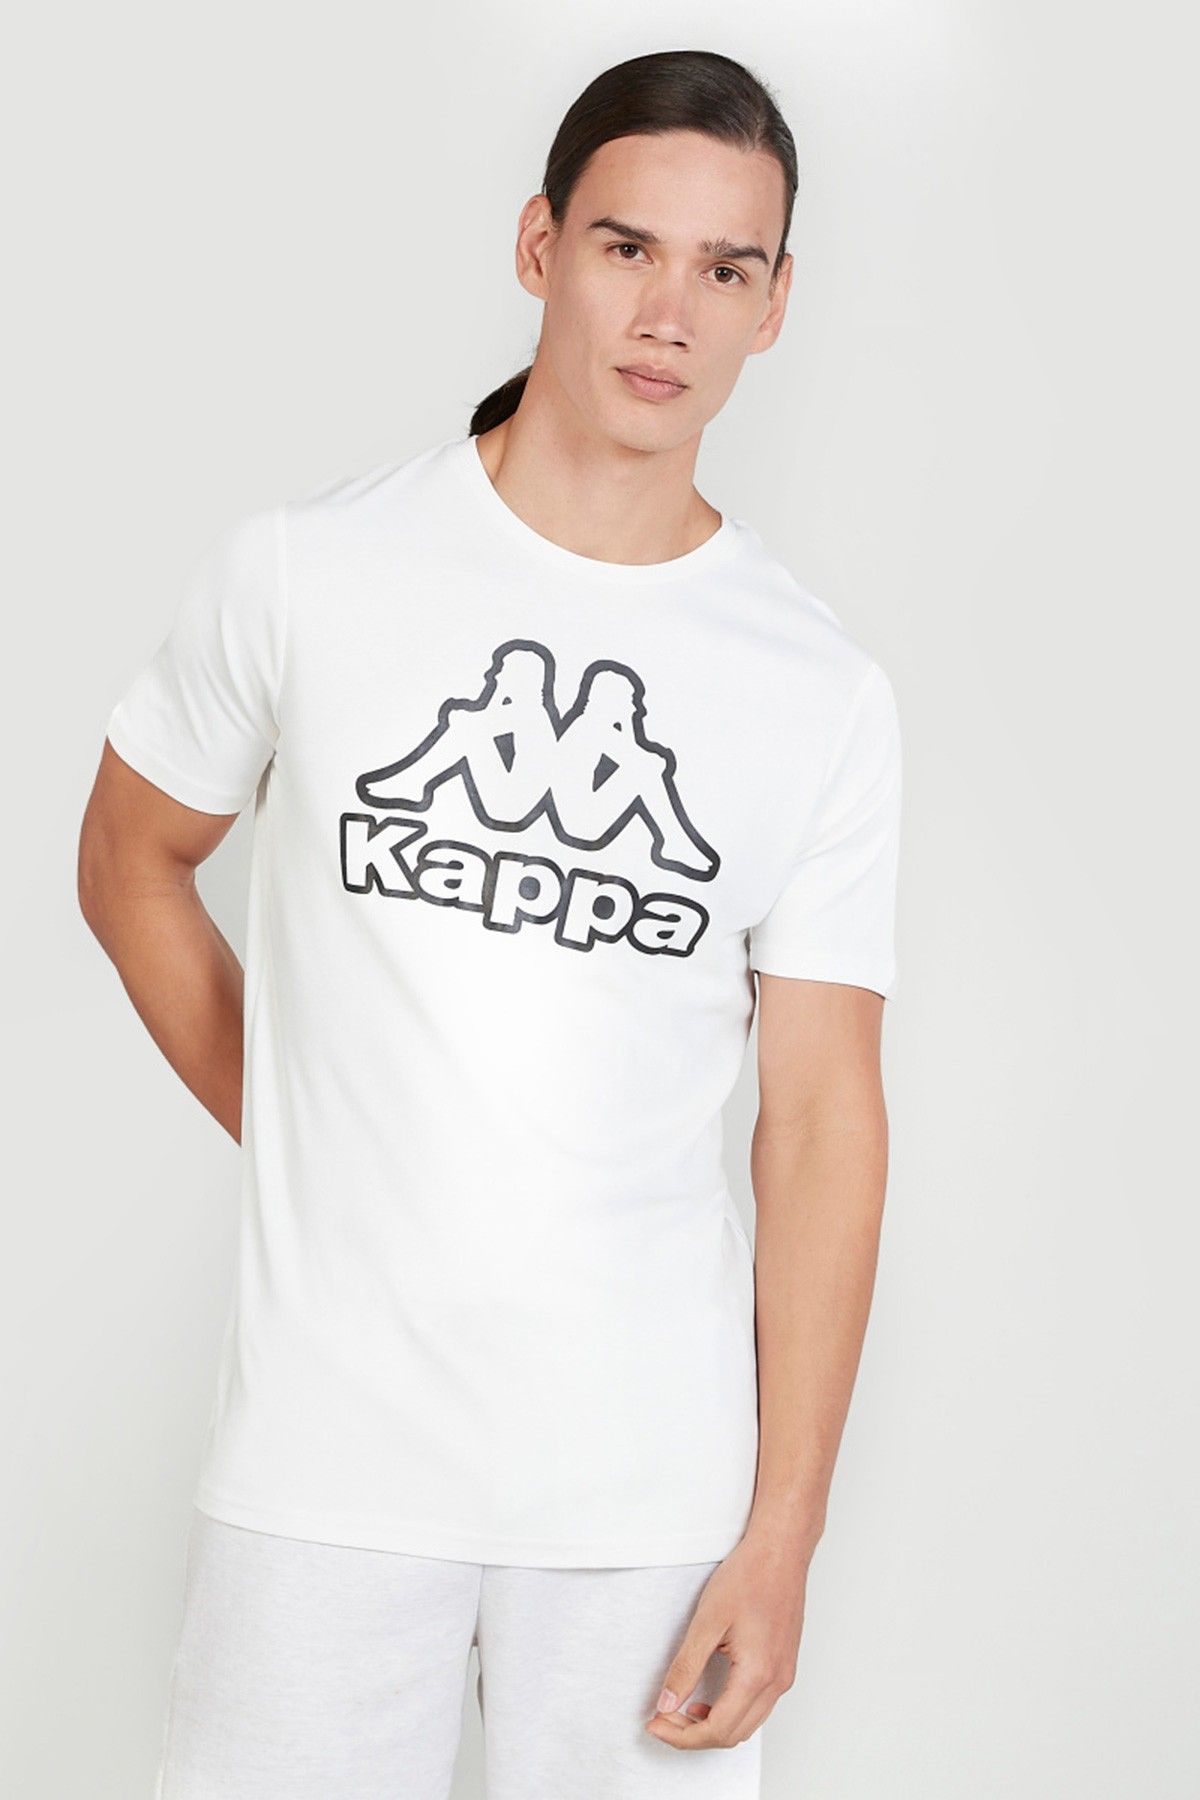 T-shirt Neck and Kappa Printed T-Shirts Short Sleeves Men Round Splash with